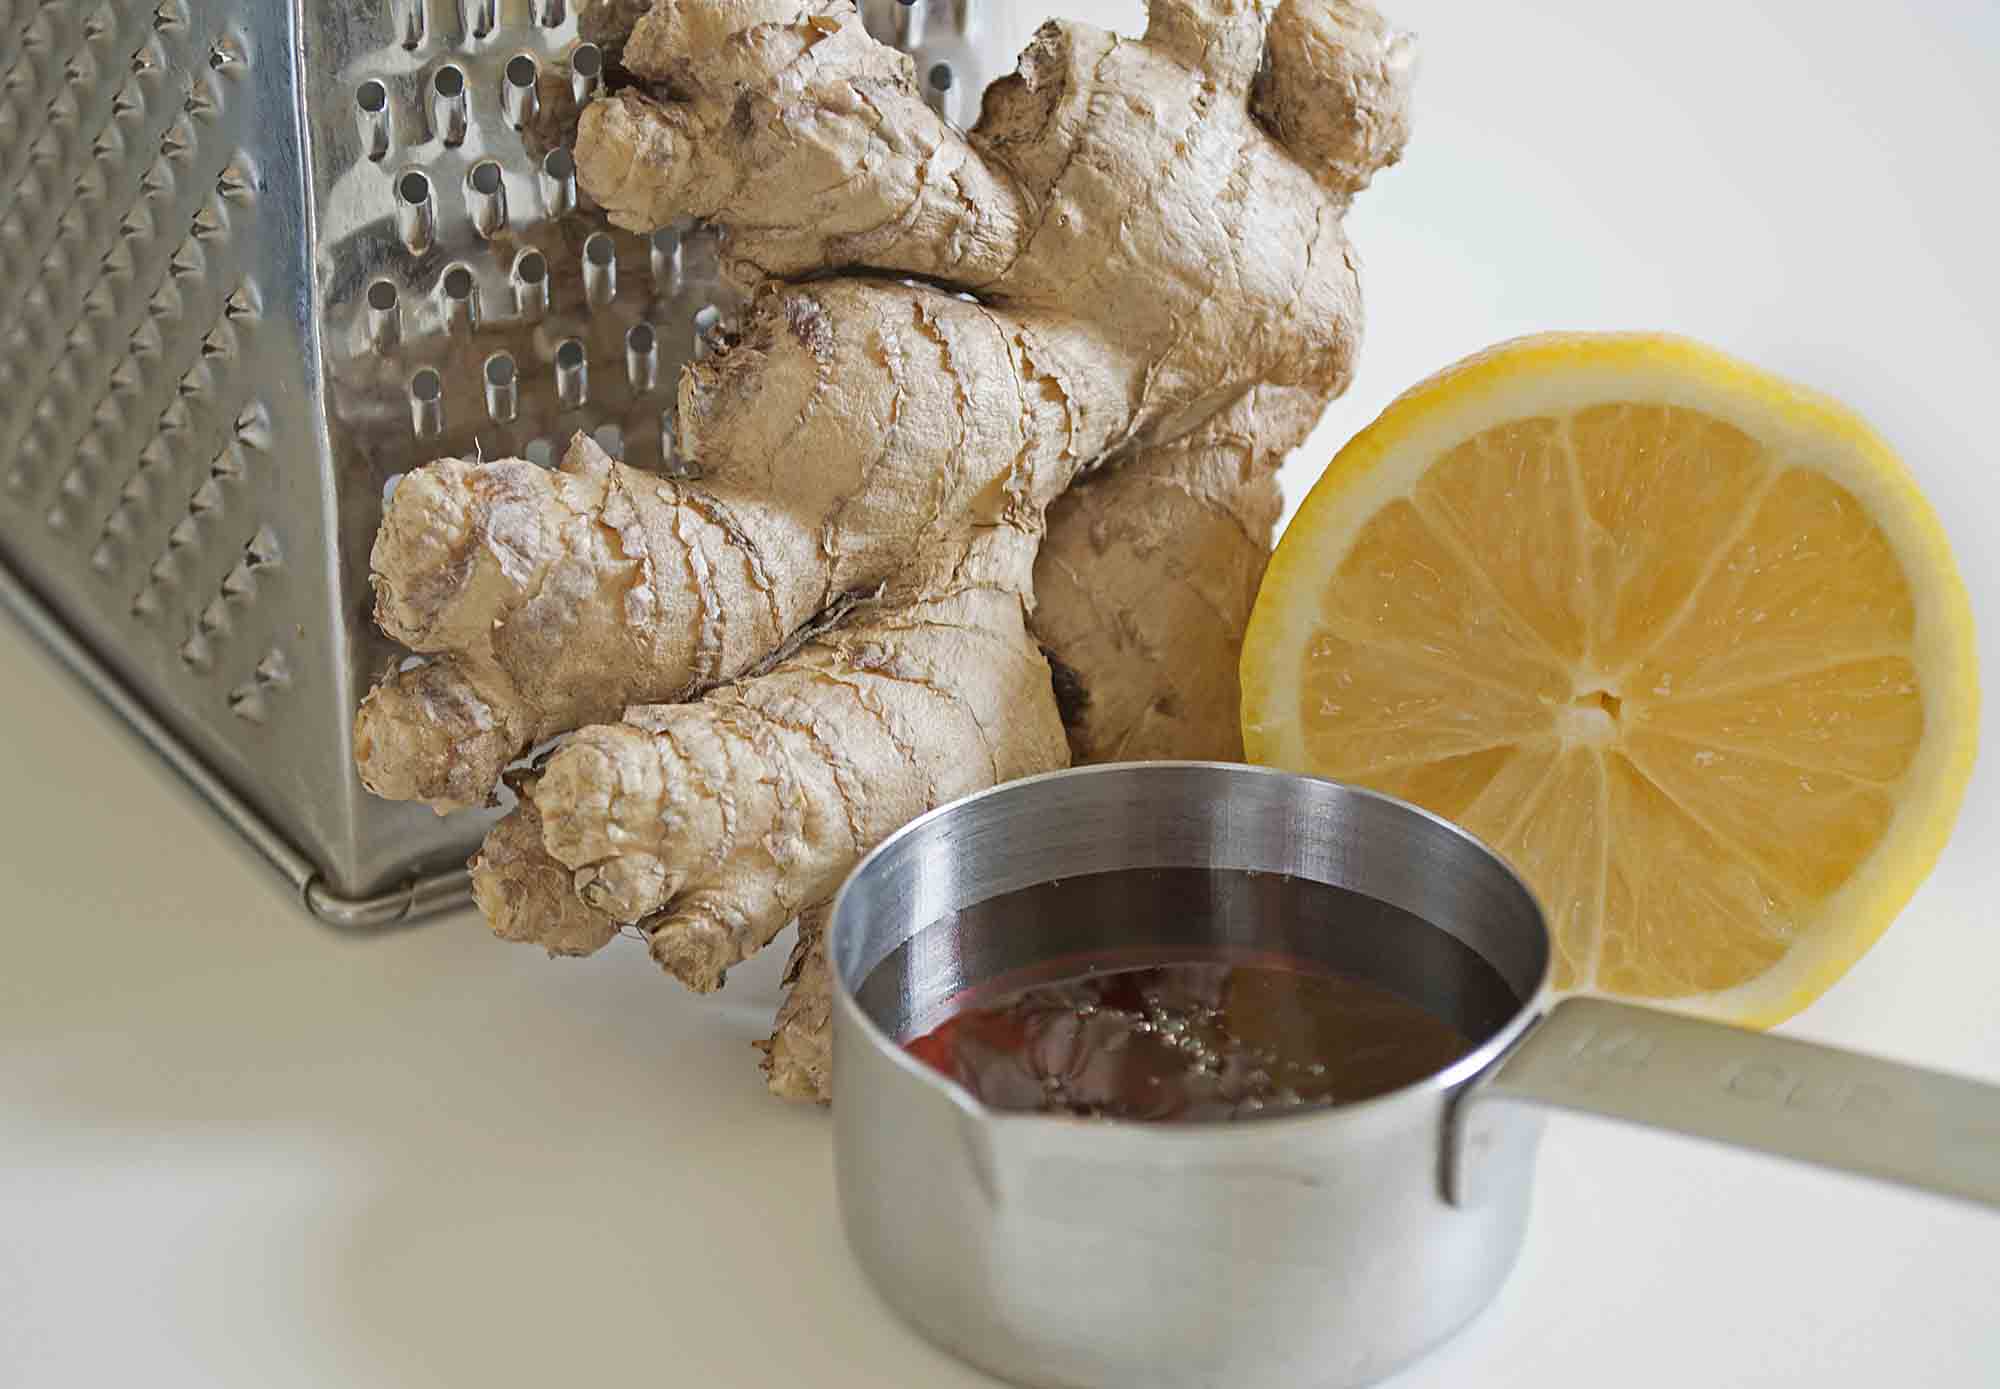 Lemon and Ginger Tea Ingredients